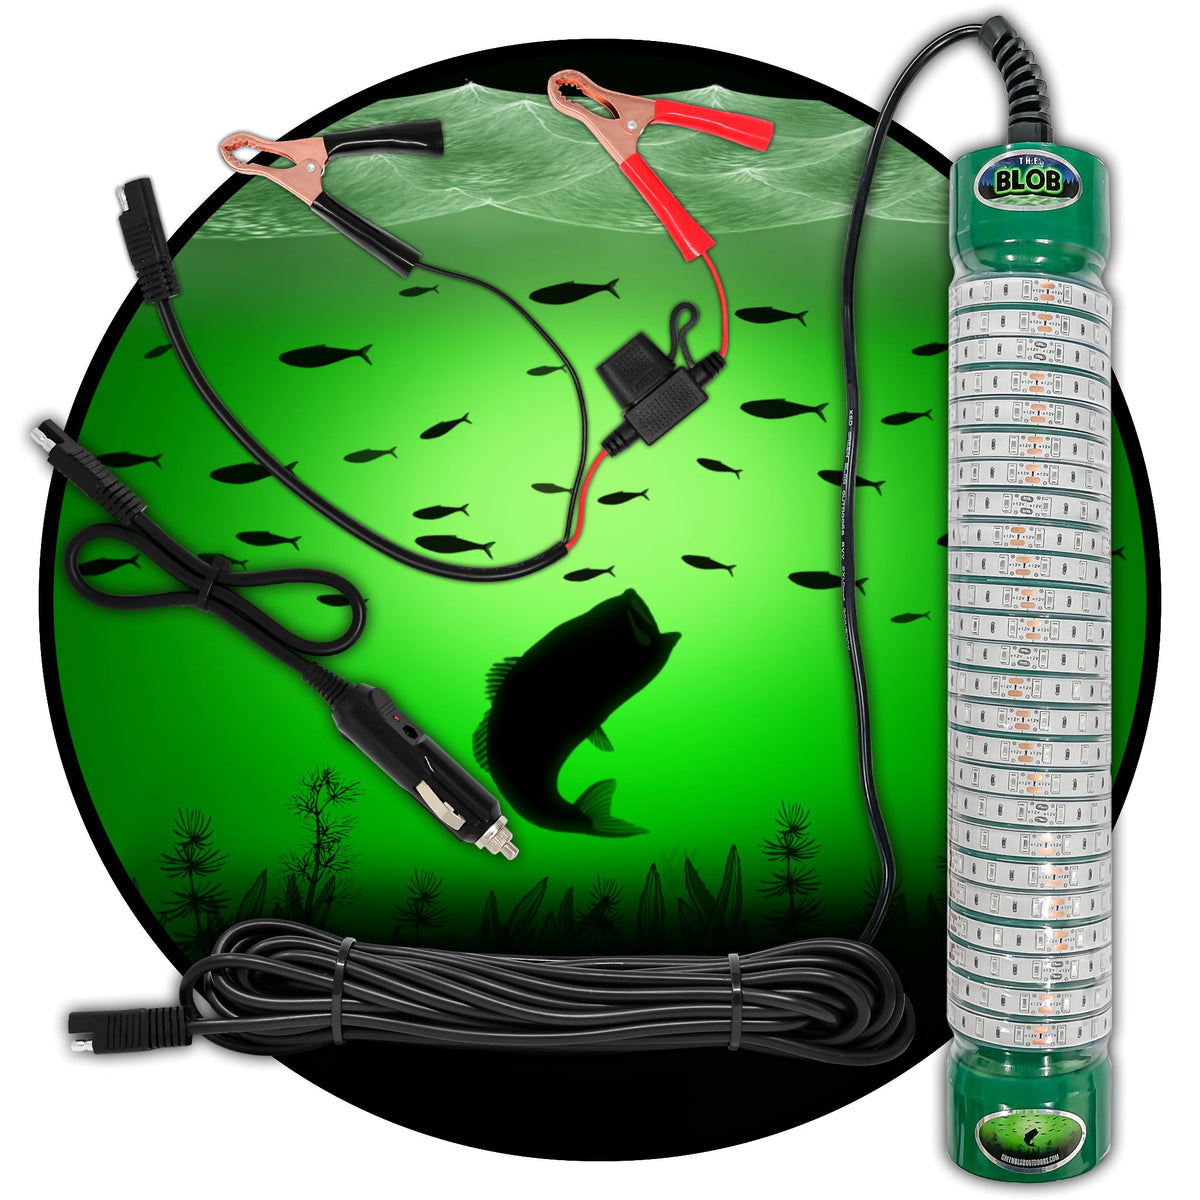 Build Your Blob Build Your Blob Green Blob Outdoors Green 15,000 Lumens Alligator Clips + Cig Lighter Plug 50 Feet